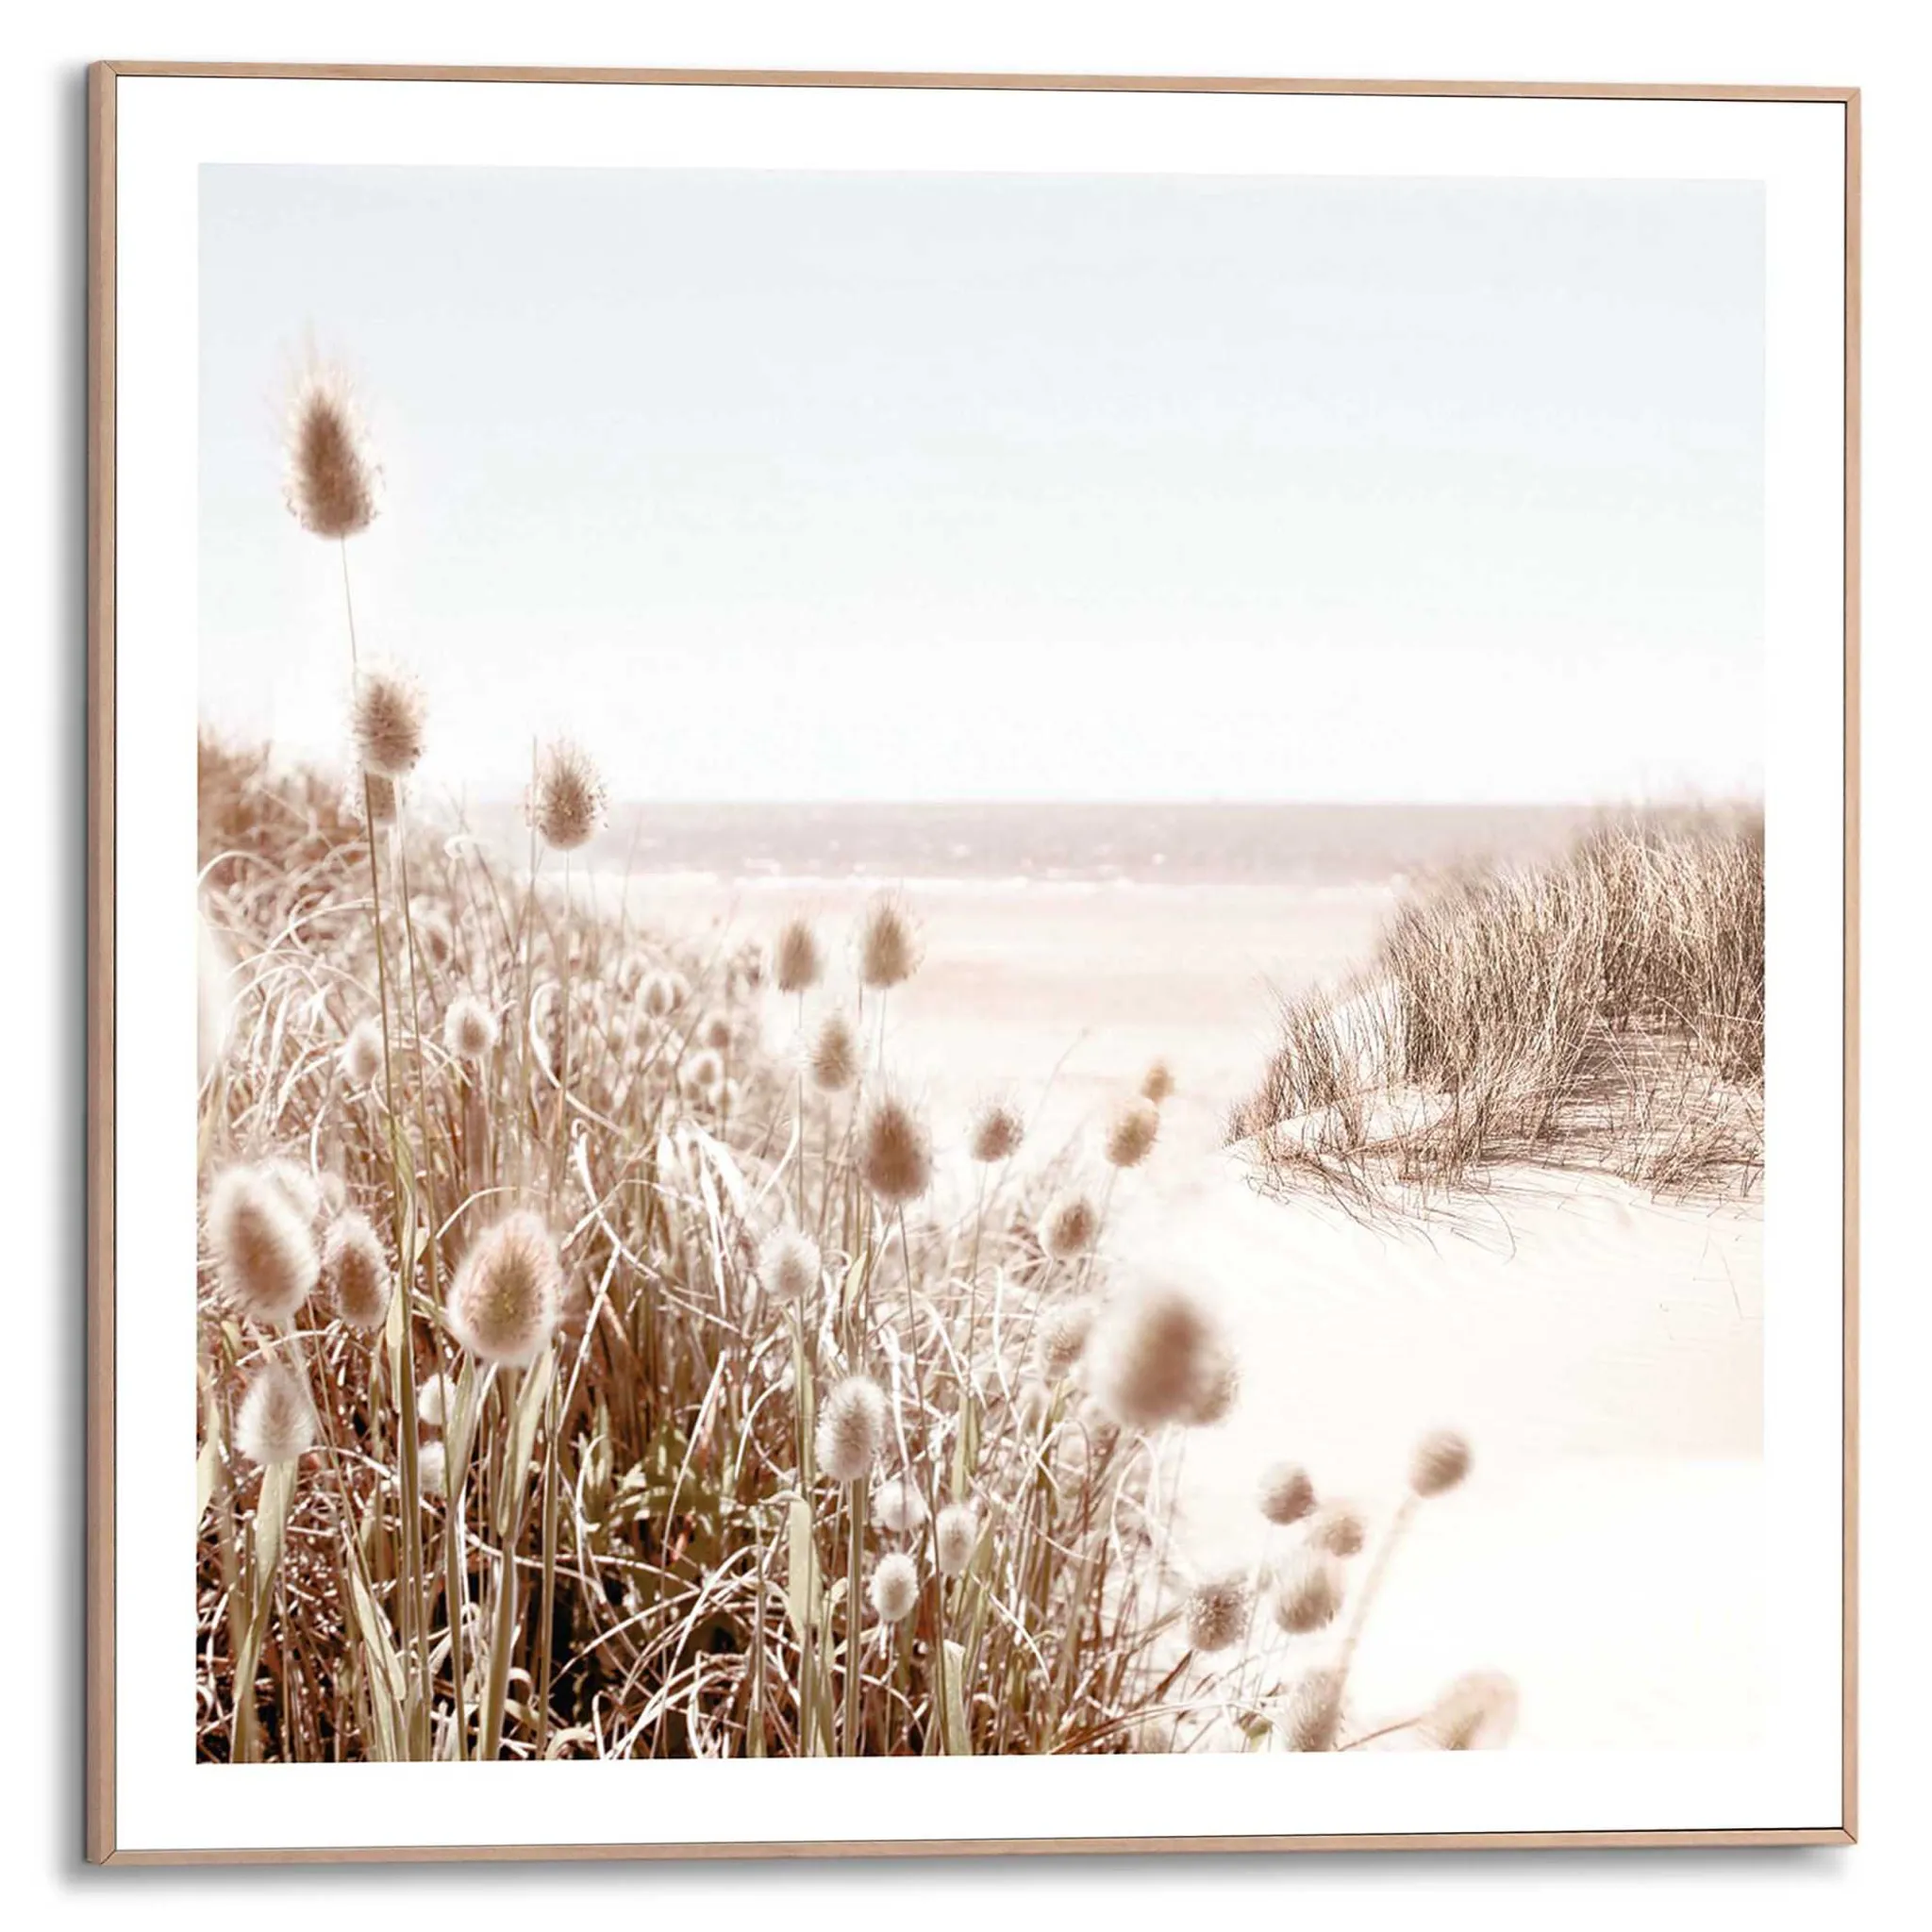 Gerahmtes Bild Slim Frame Strand Gras - Meer